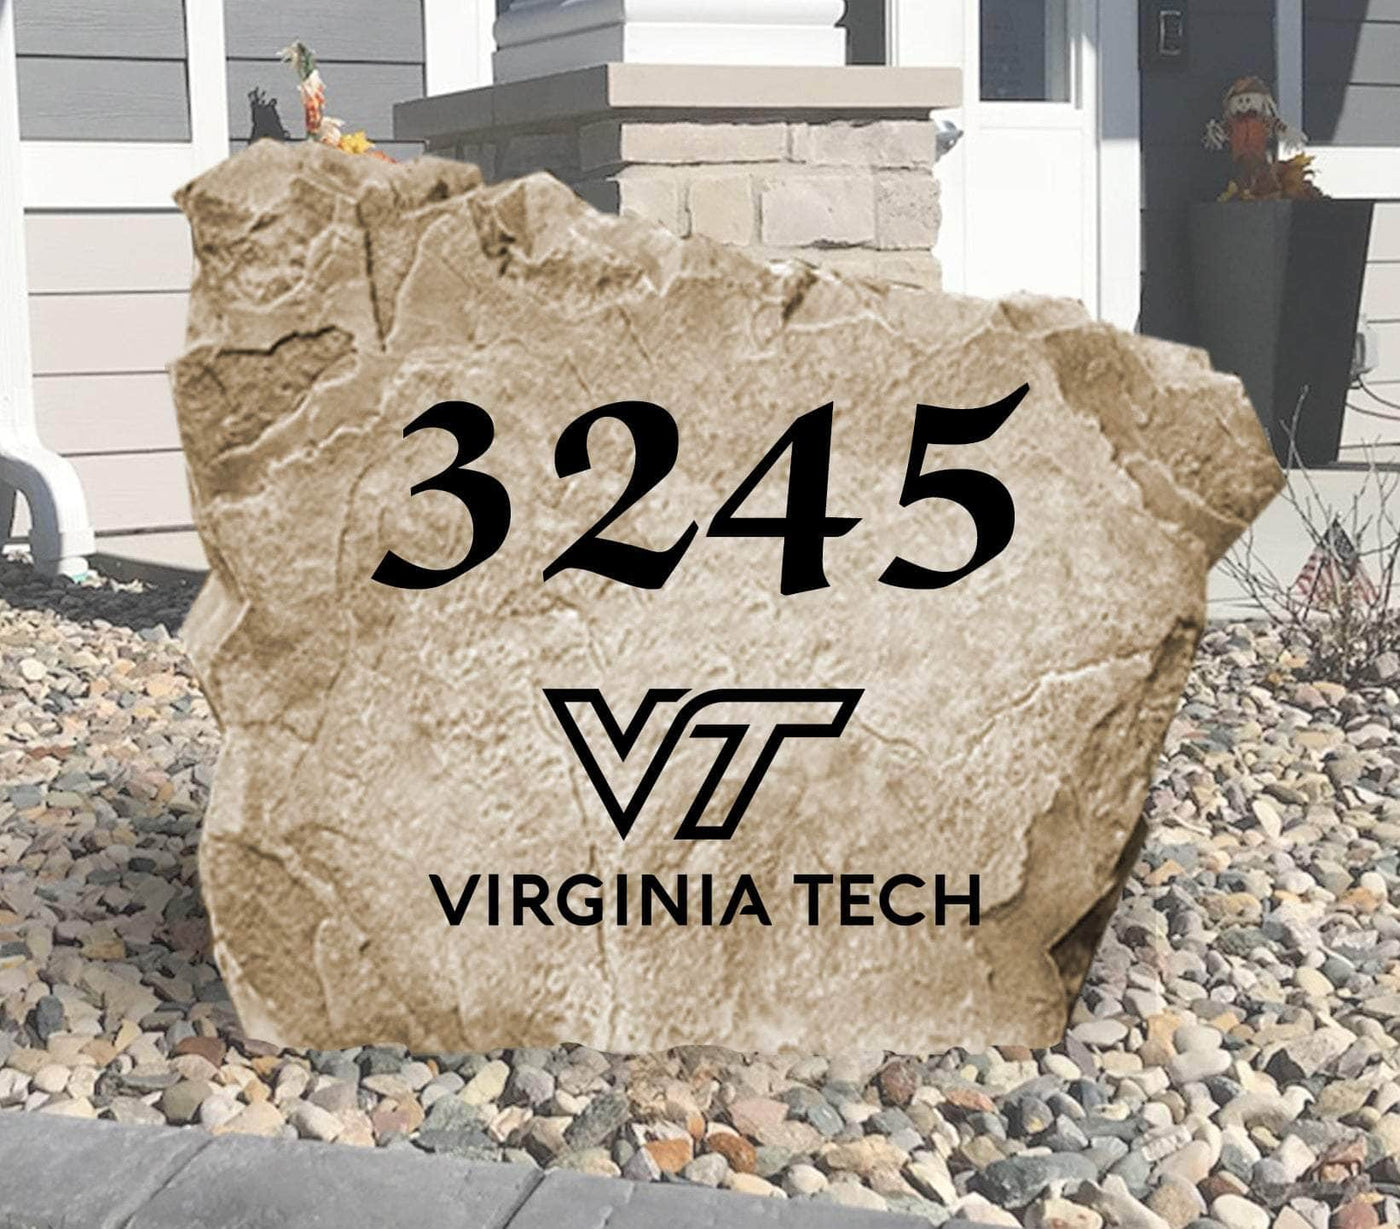 Virginia Tech Address Stone